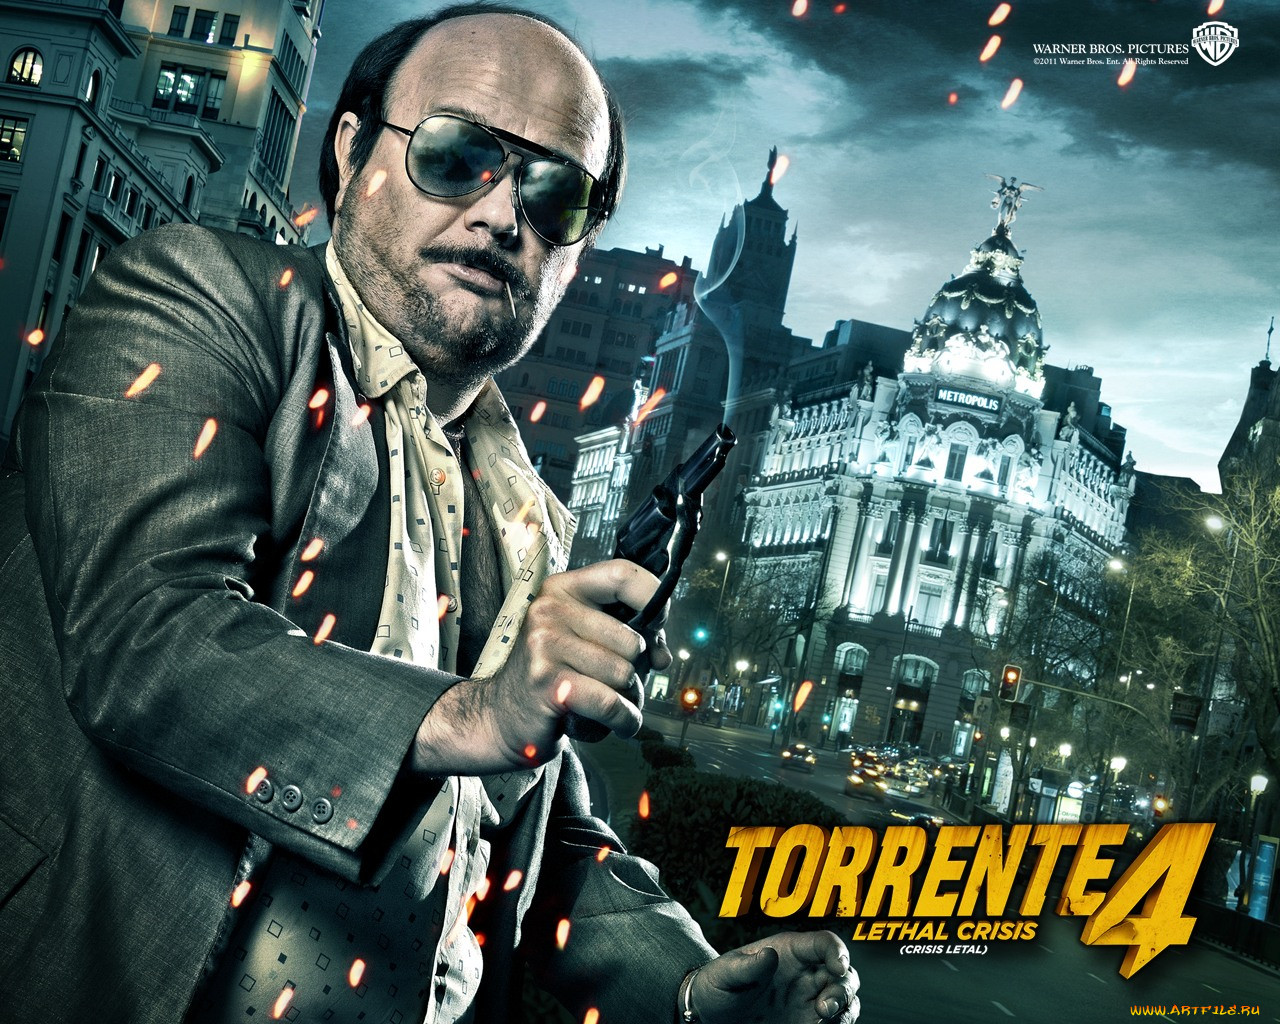 Torrente 4 online peliculas yonkis estrenos rocket league soundtrack torrent